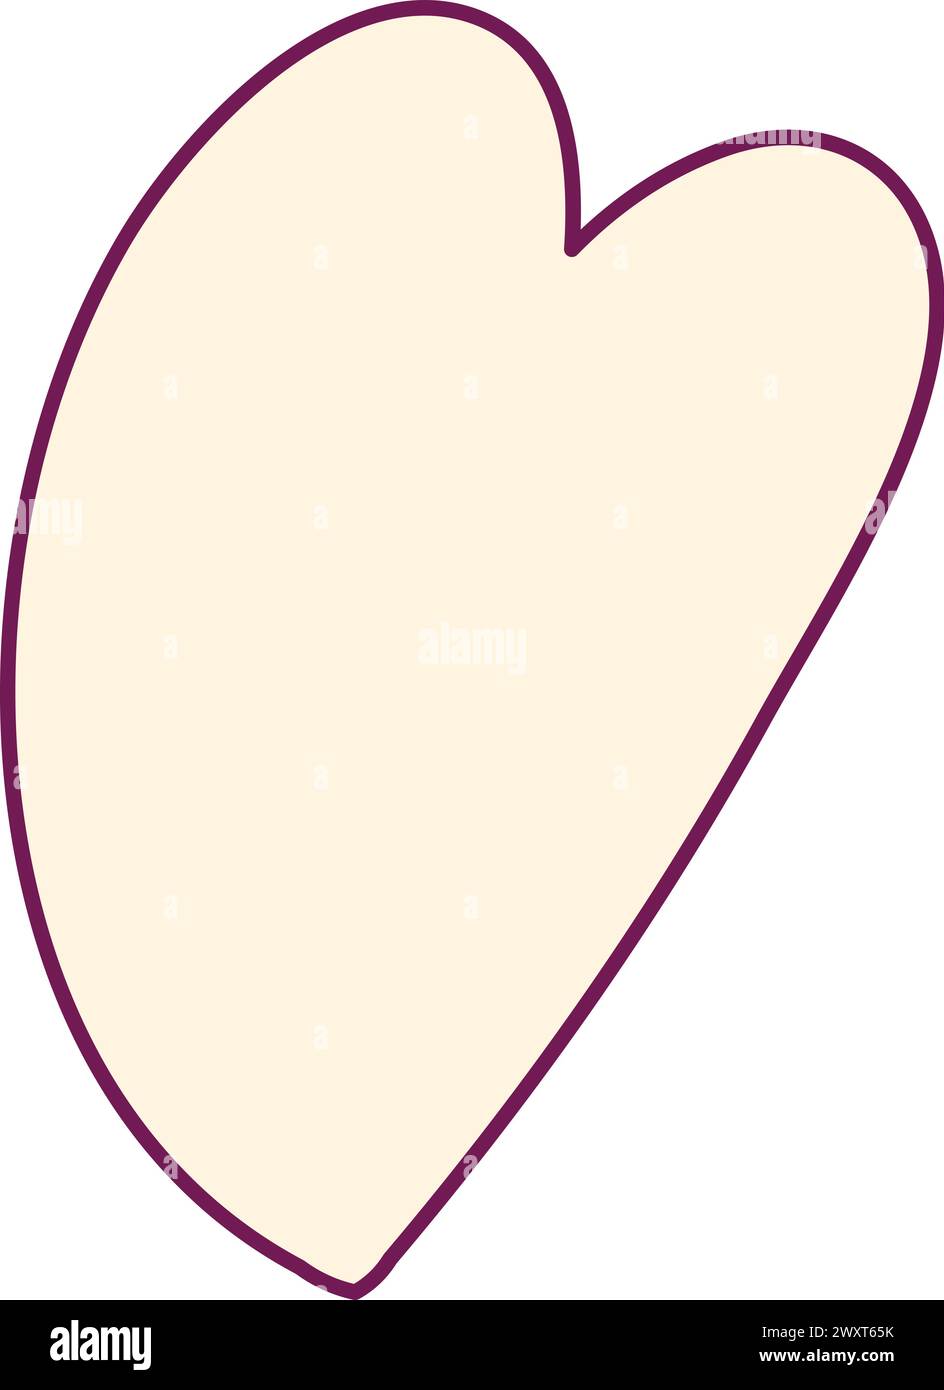 Yellow Cartoon Hand Drawn Vector Heart Element Stock Vector